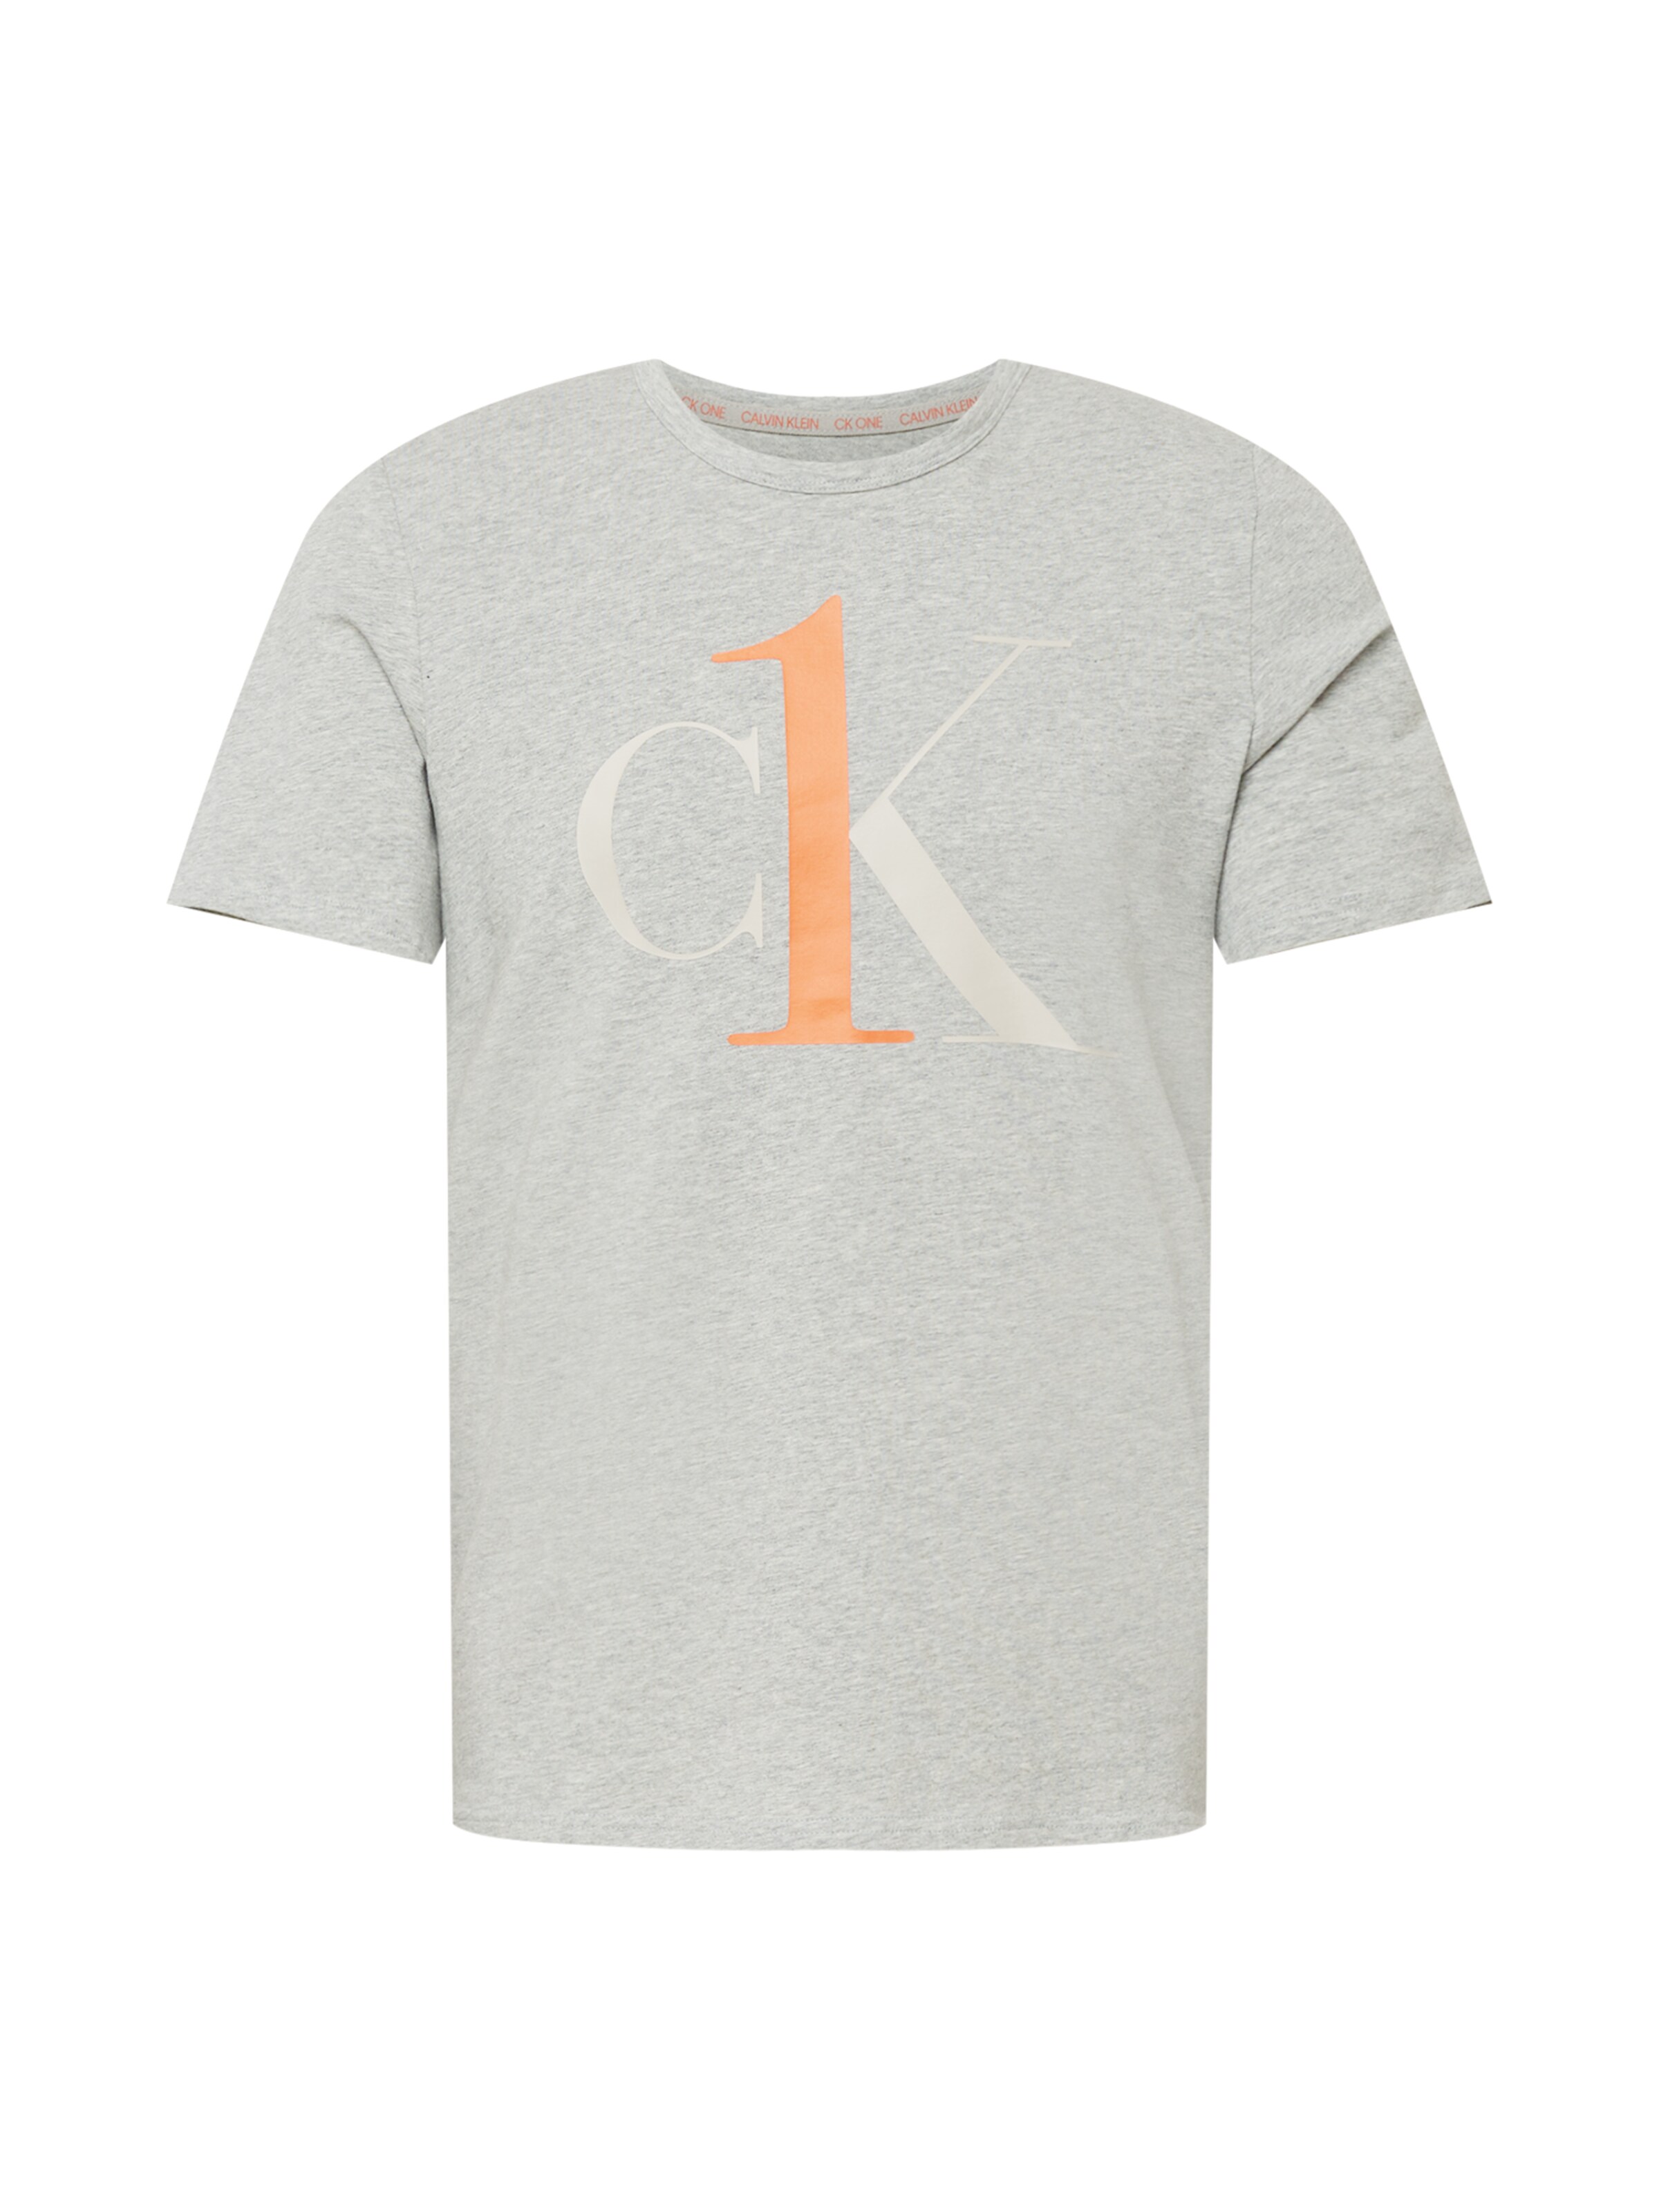 Männer Shirts Calvin Klein Schlafshirt in Grau, Graumeliert - VD23127